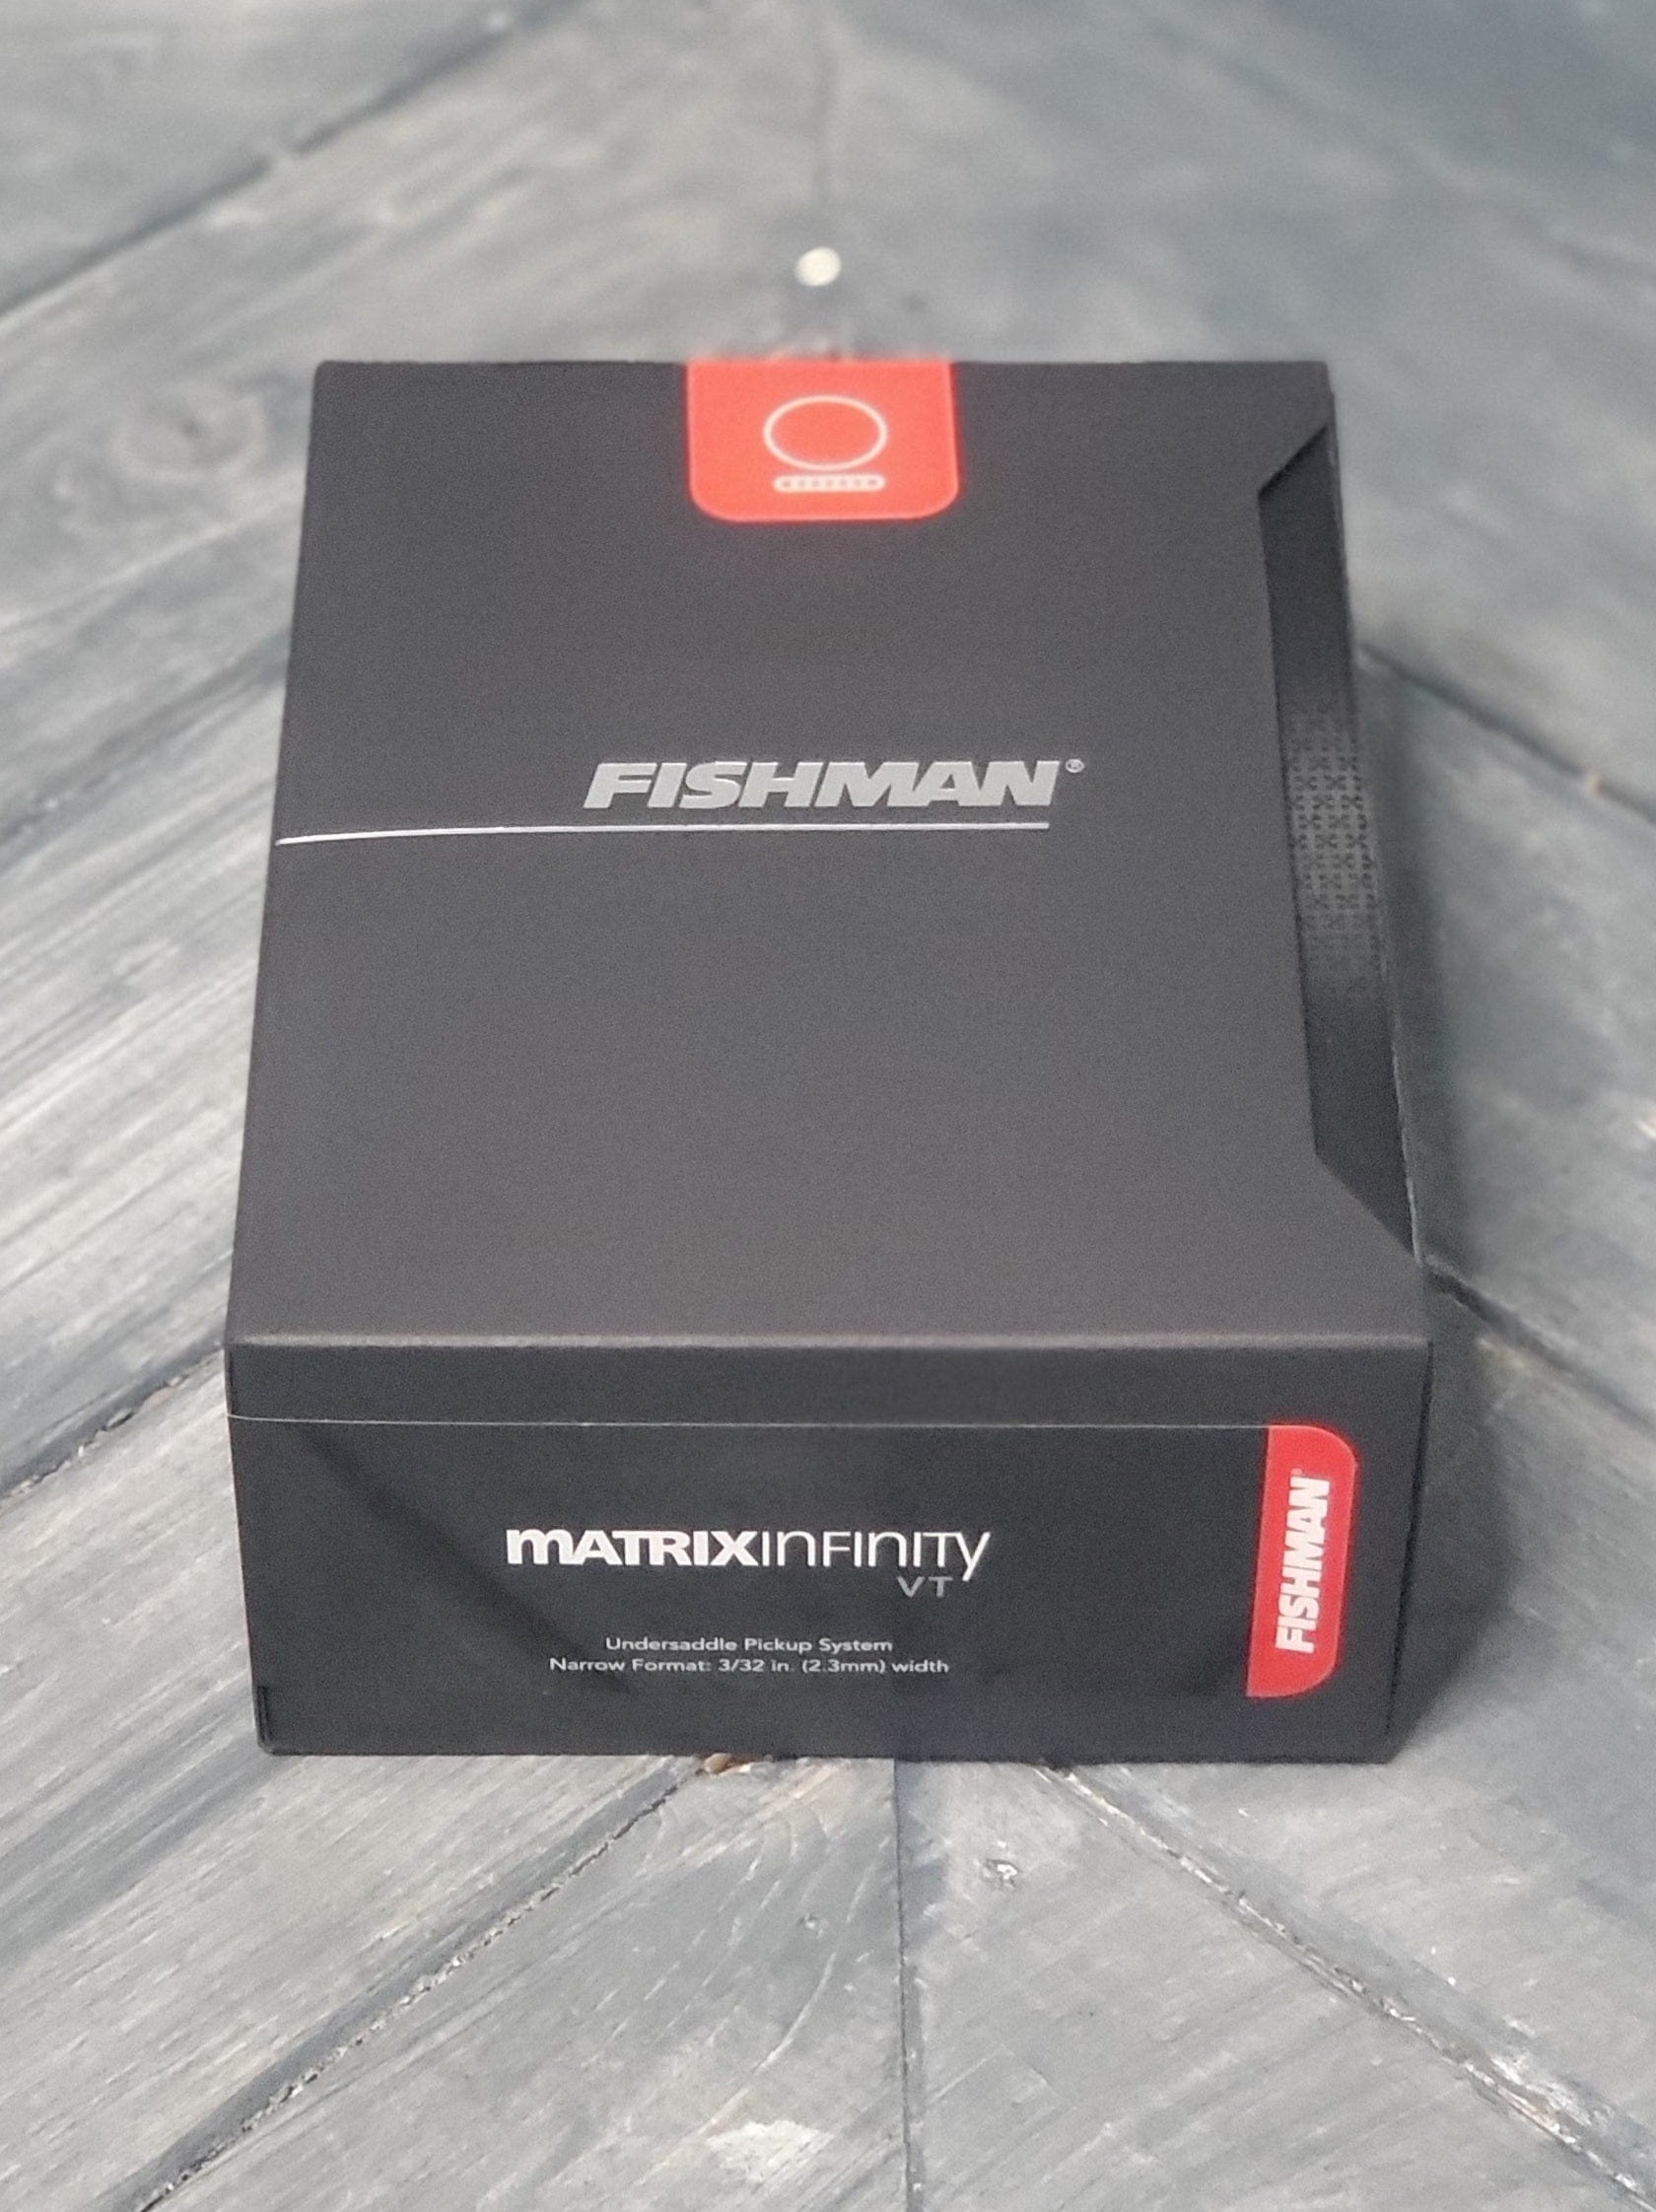 Fishman MATRIX infinity 2.3mm